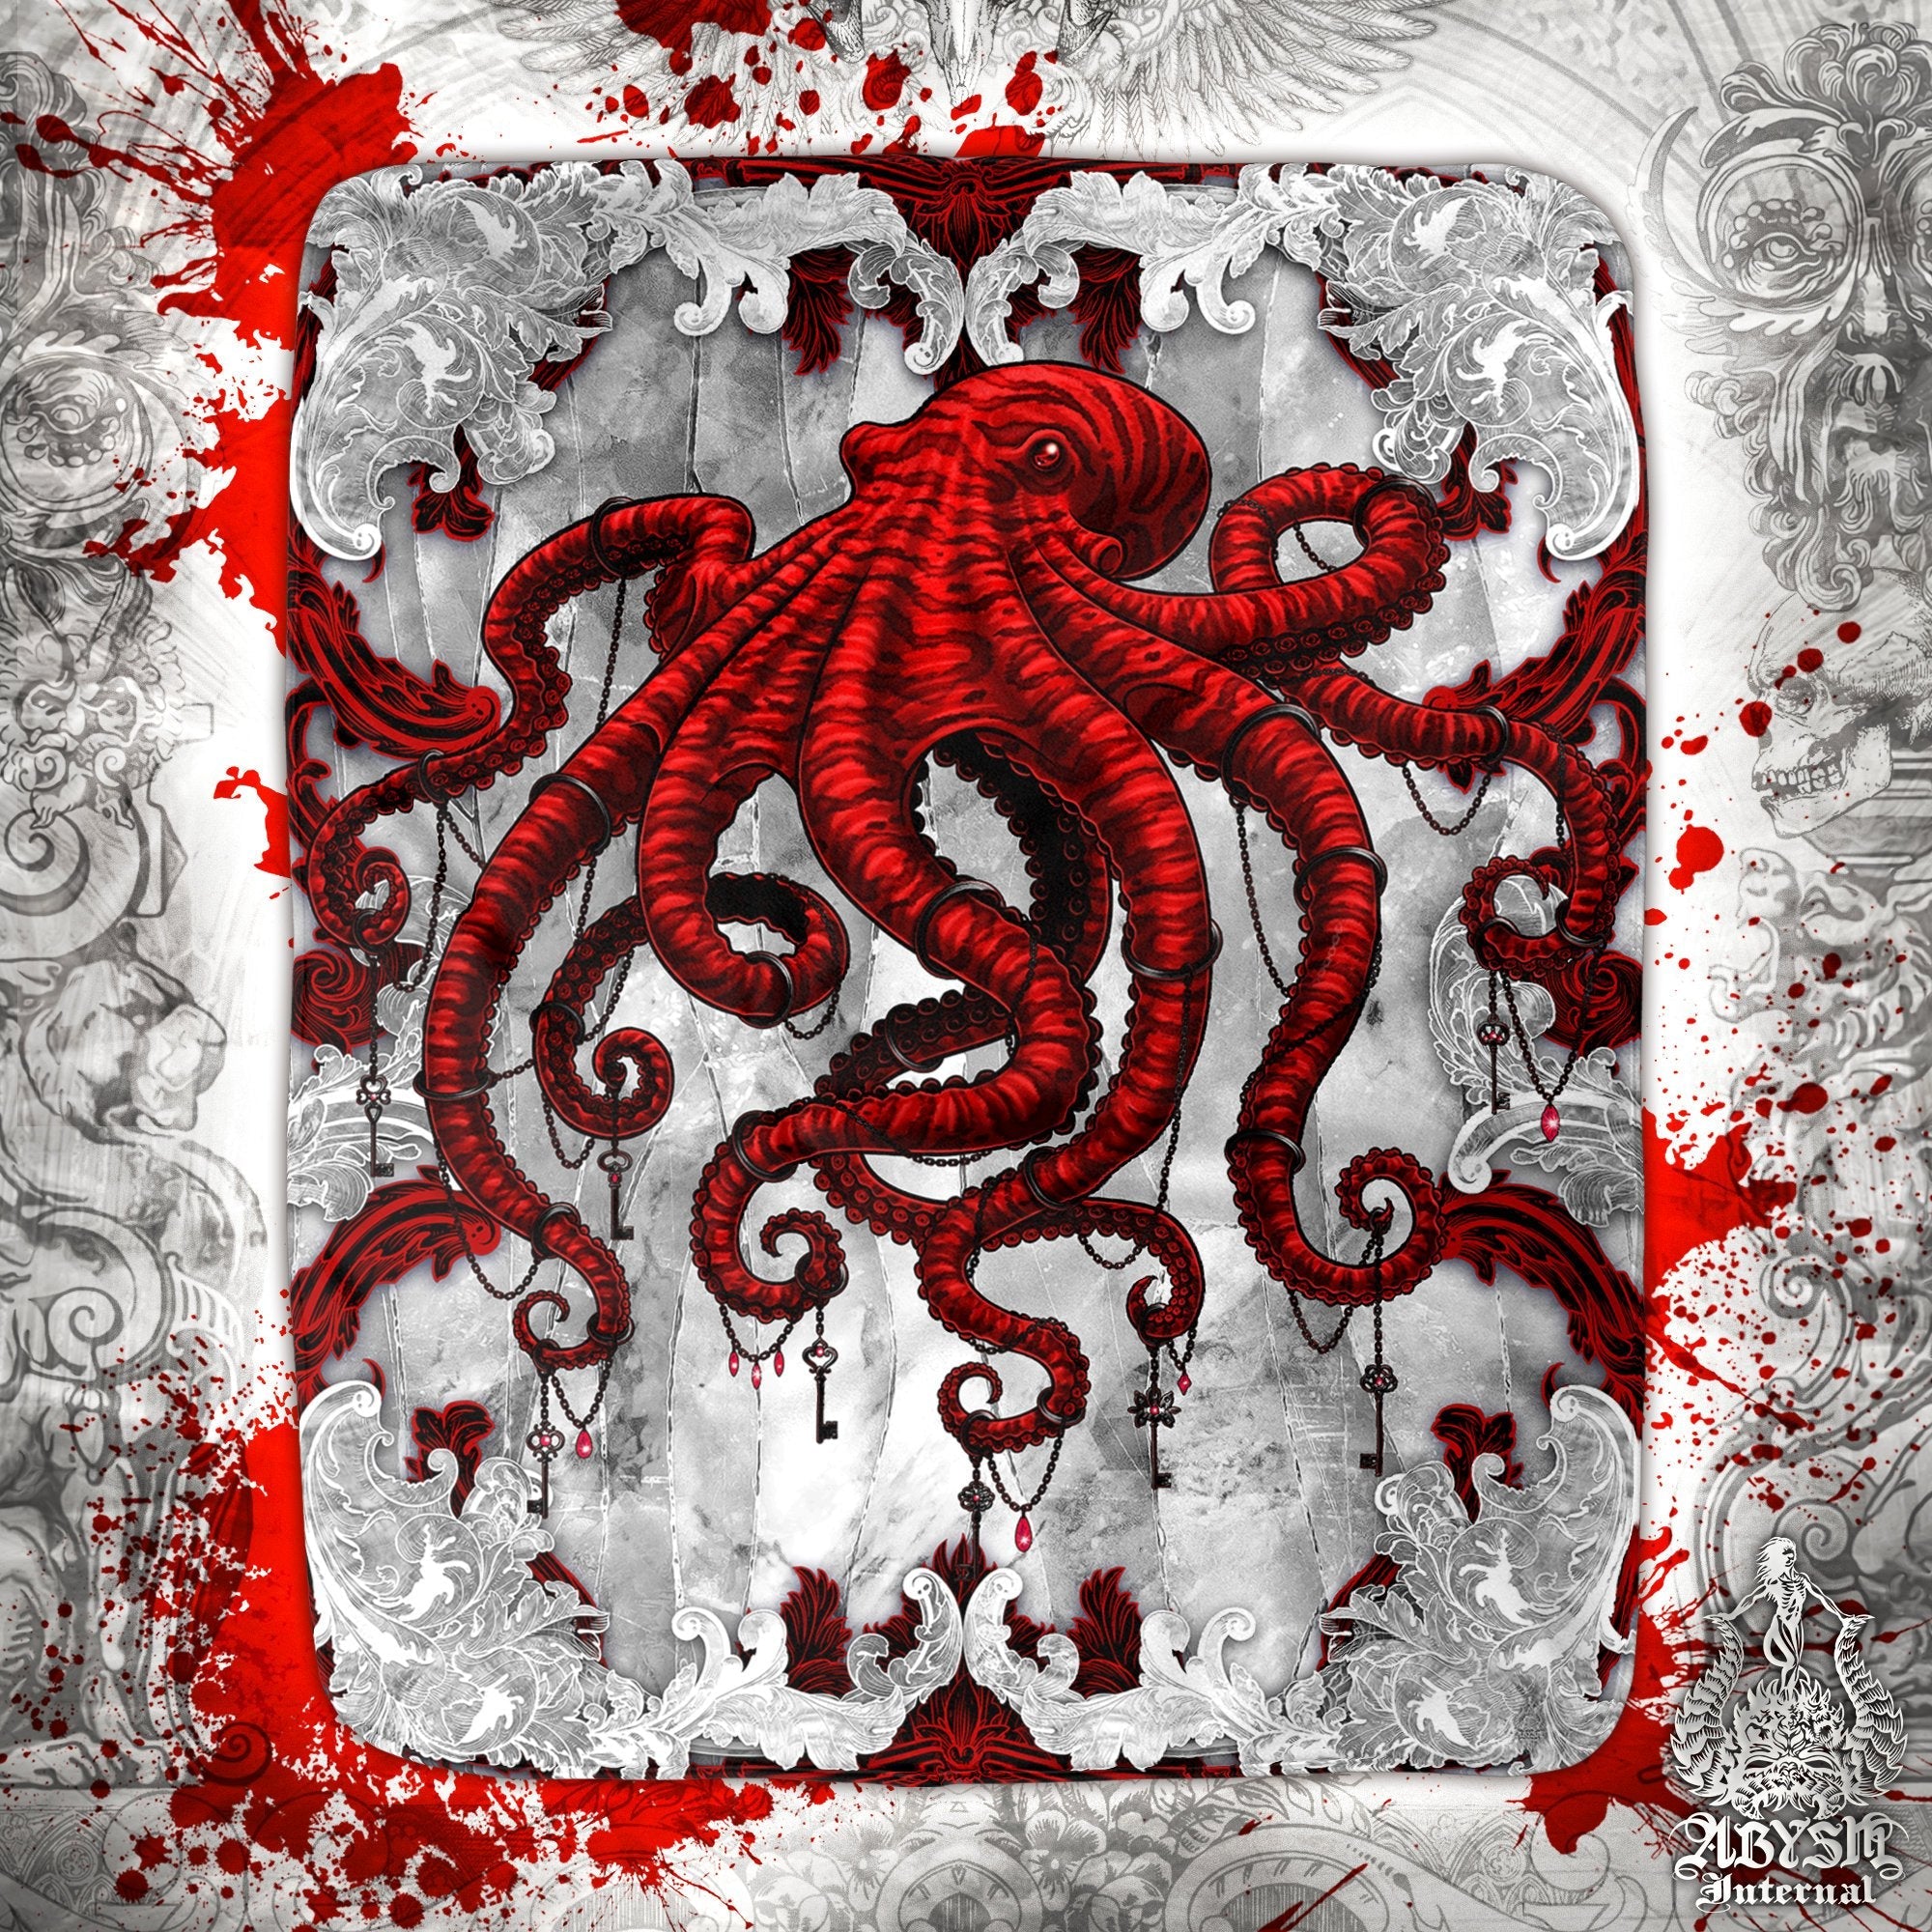 Octopus Throw Fleece Blanket, Gothic Gift, White Goth Home Decor - Bloody - Abysm Internal